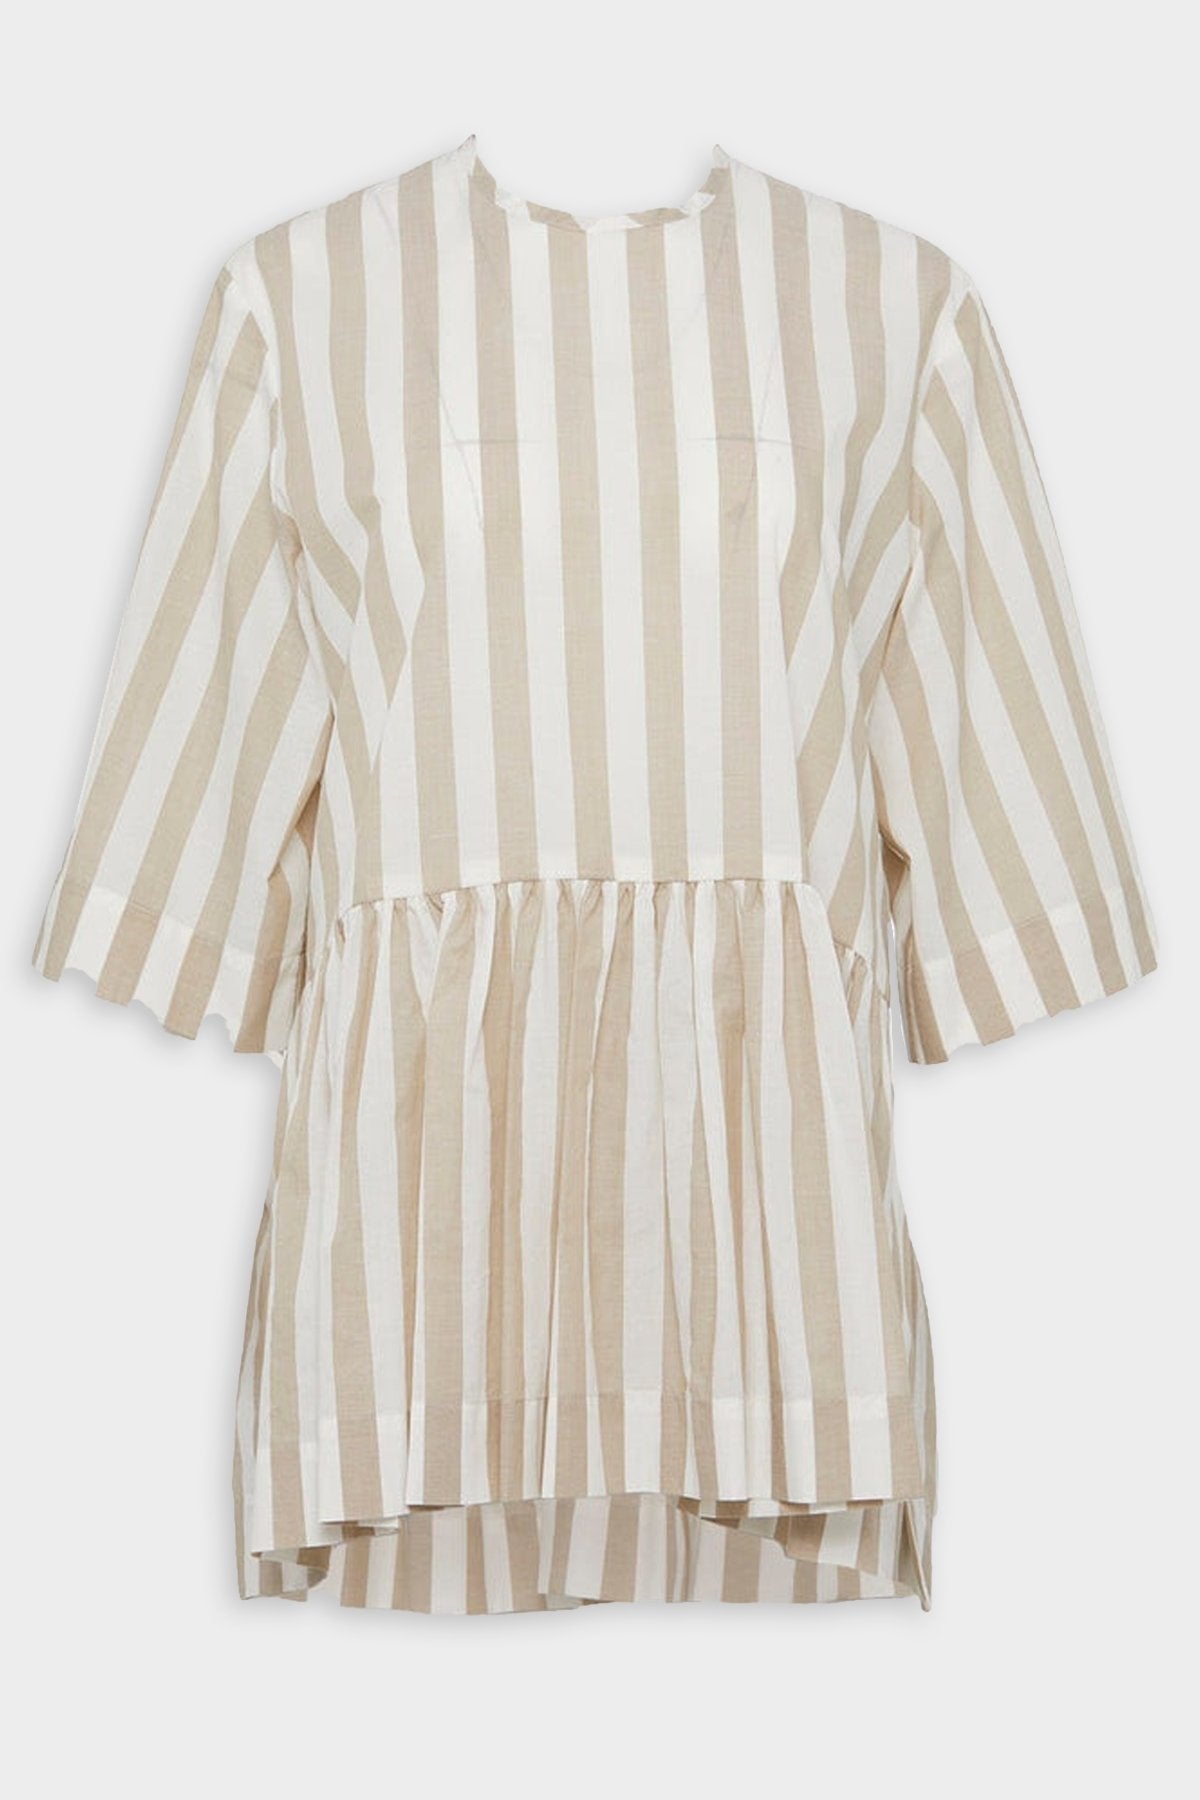 Neta Shirt in Light Brown Bold Stripes - shop-olivia.com